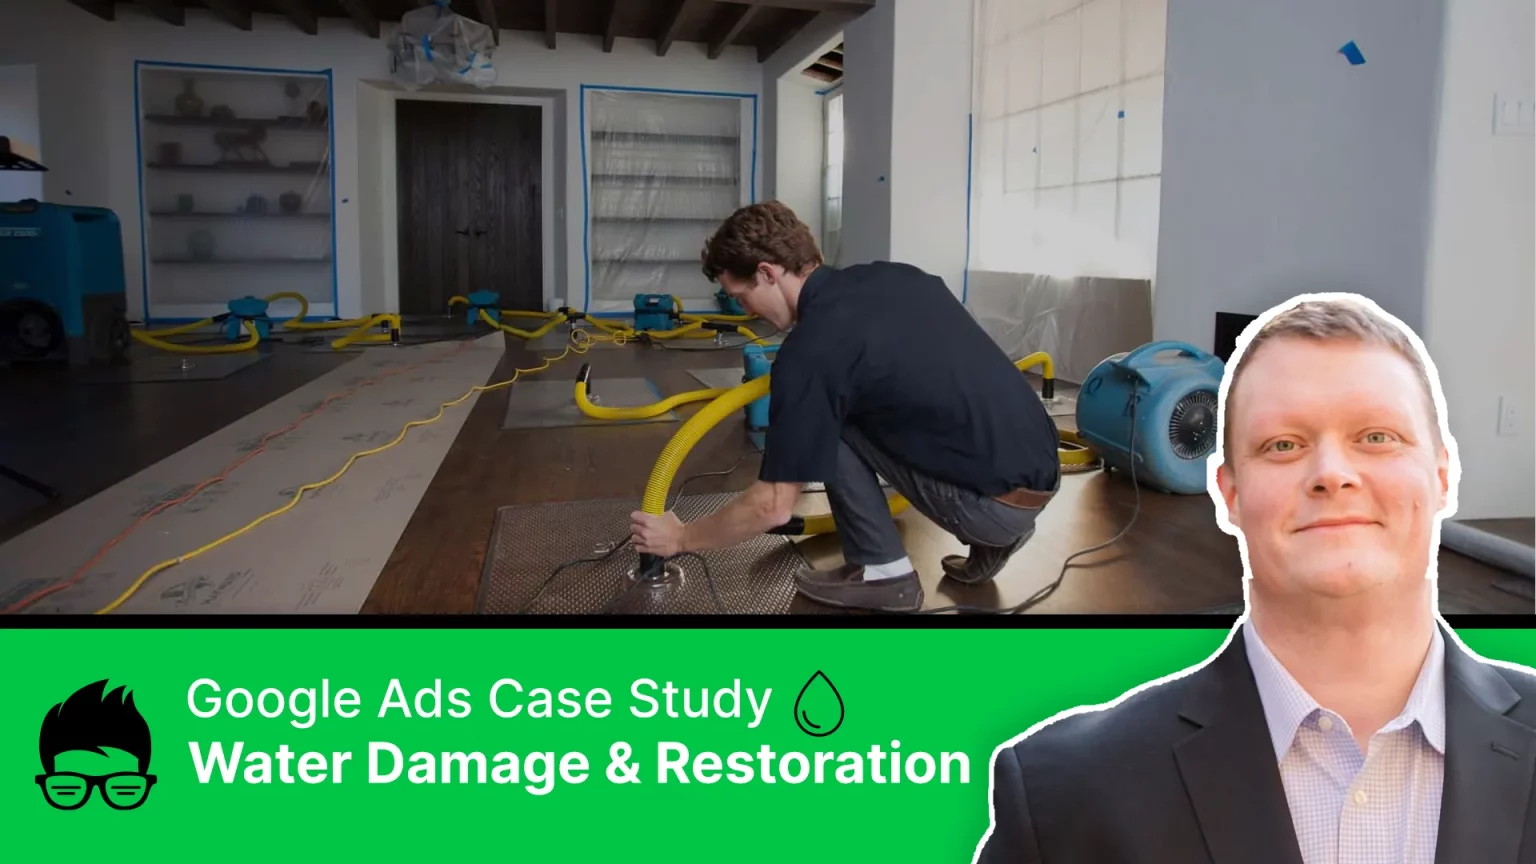 Google Ads Case Study - Water Damage & Restoration Google Ads PPC